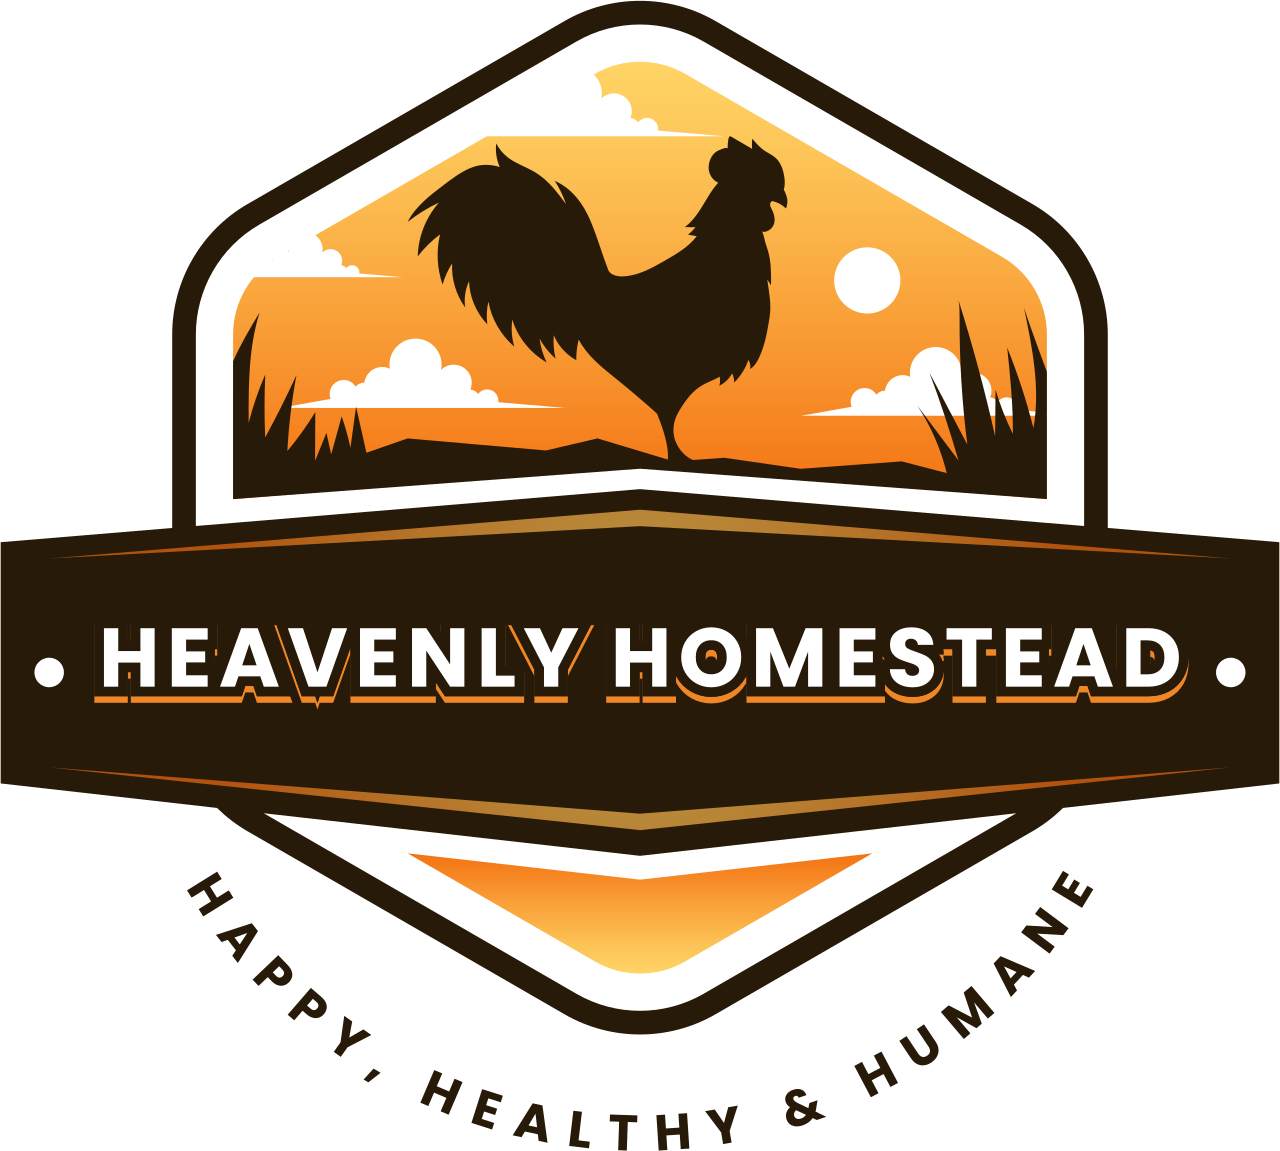 Heavenly Homestead's logo